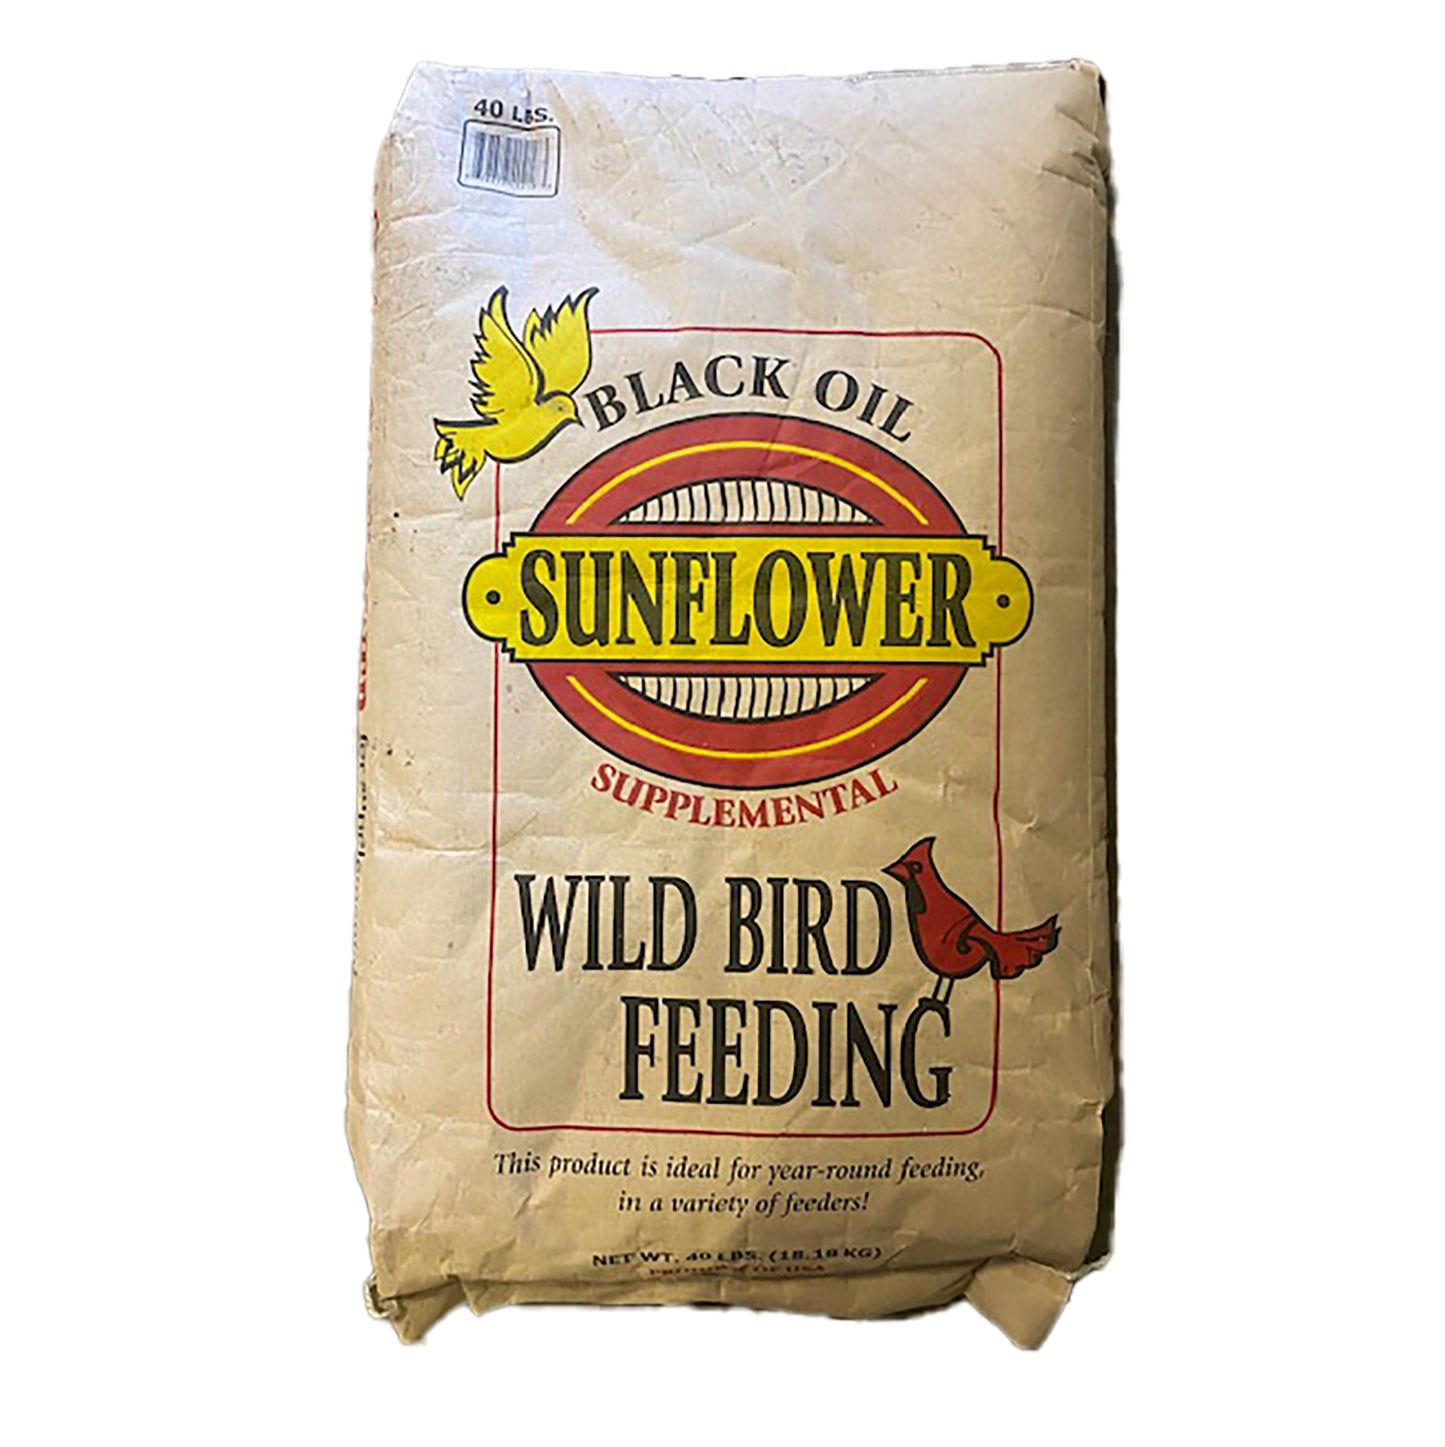 Bird Pro Black Oil Sunflower Seeds